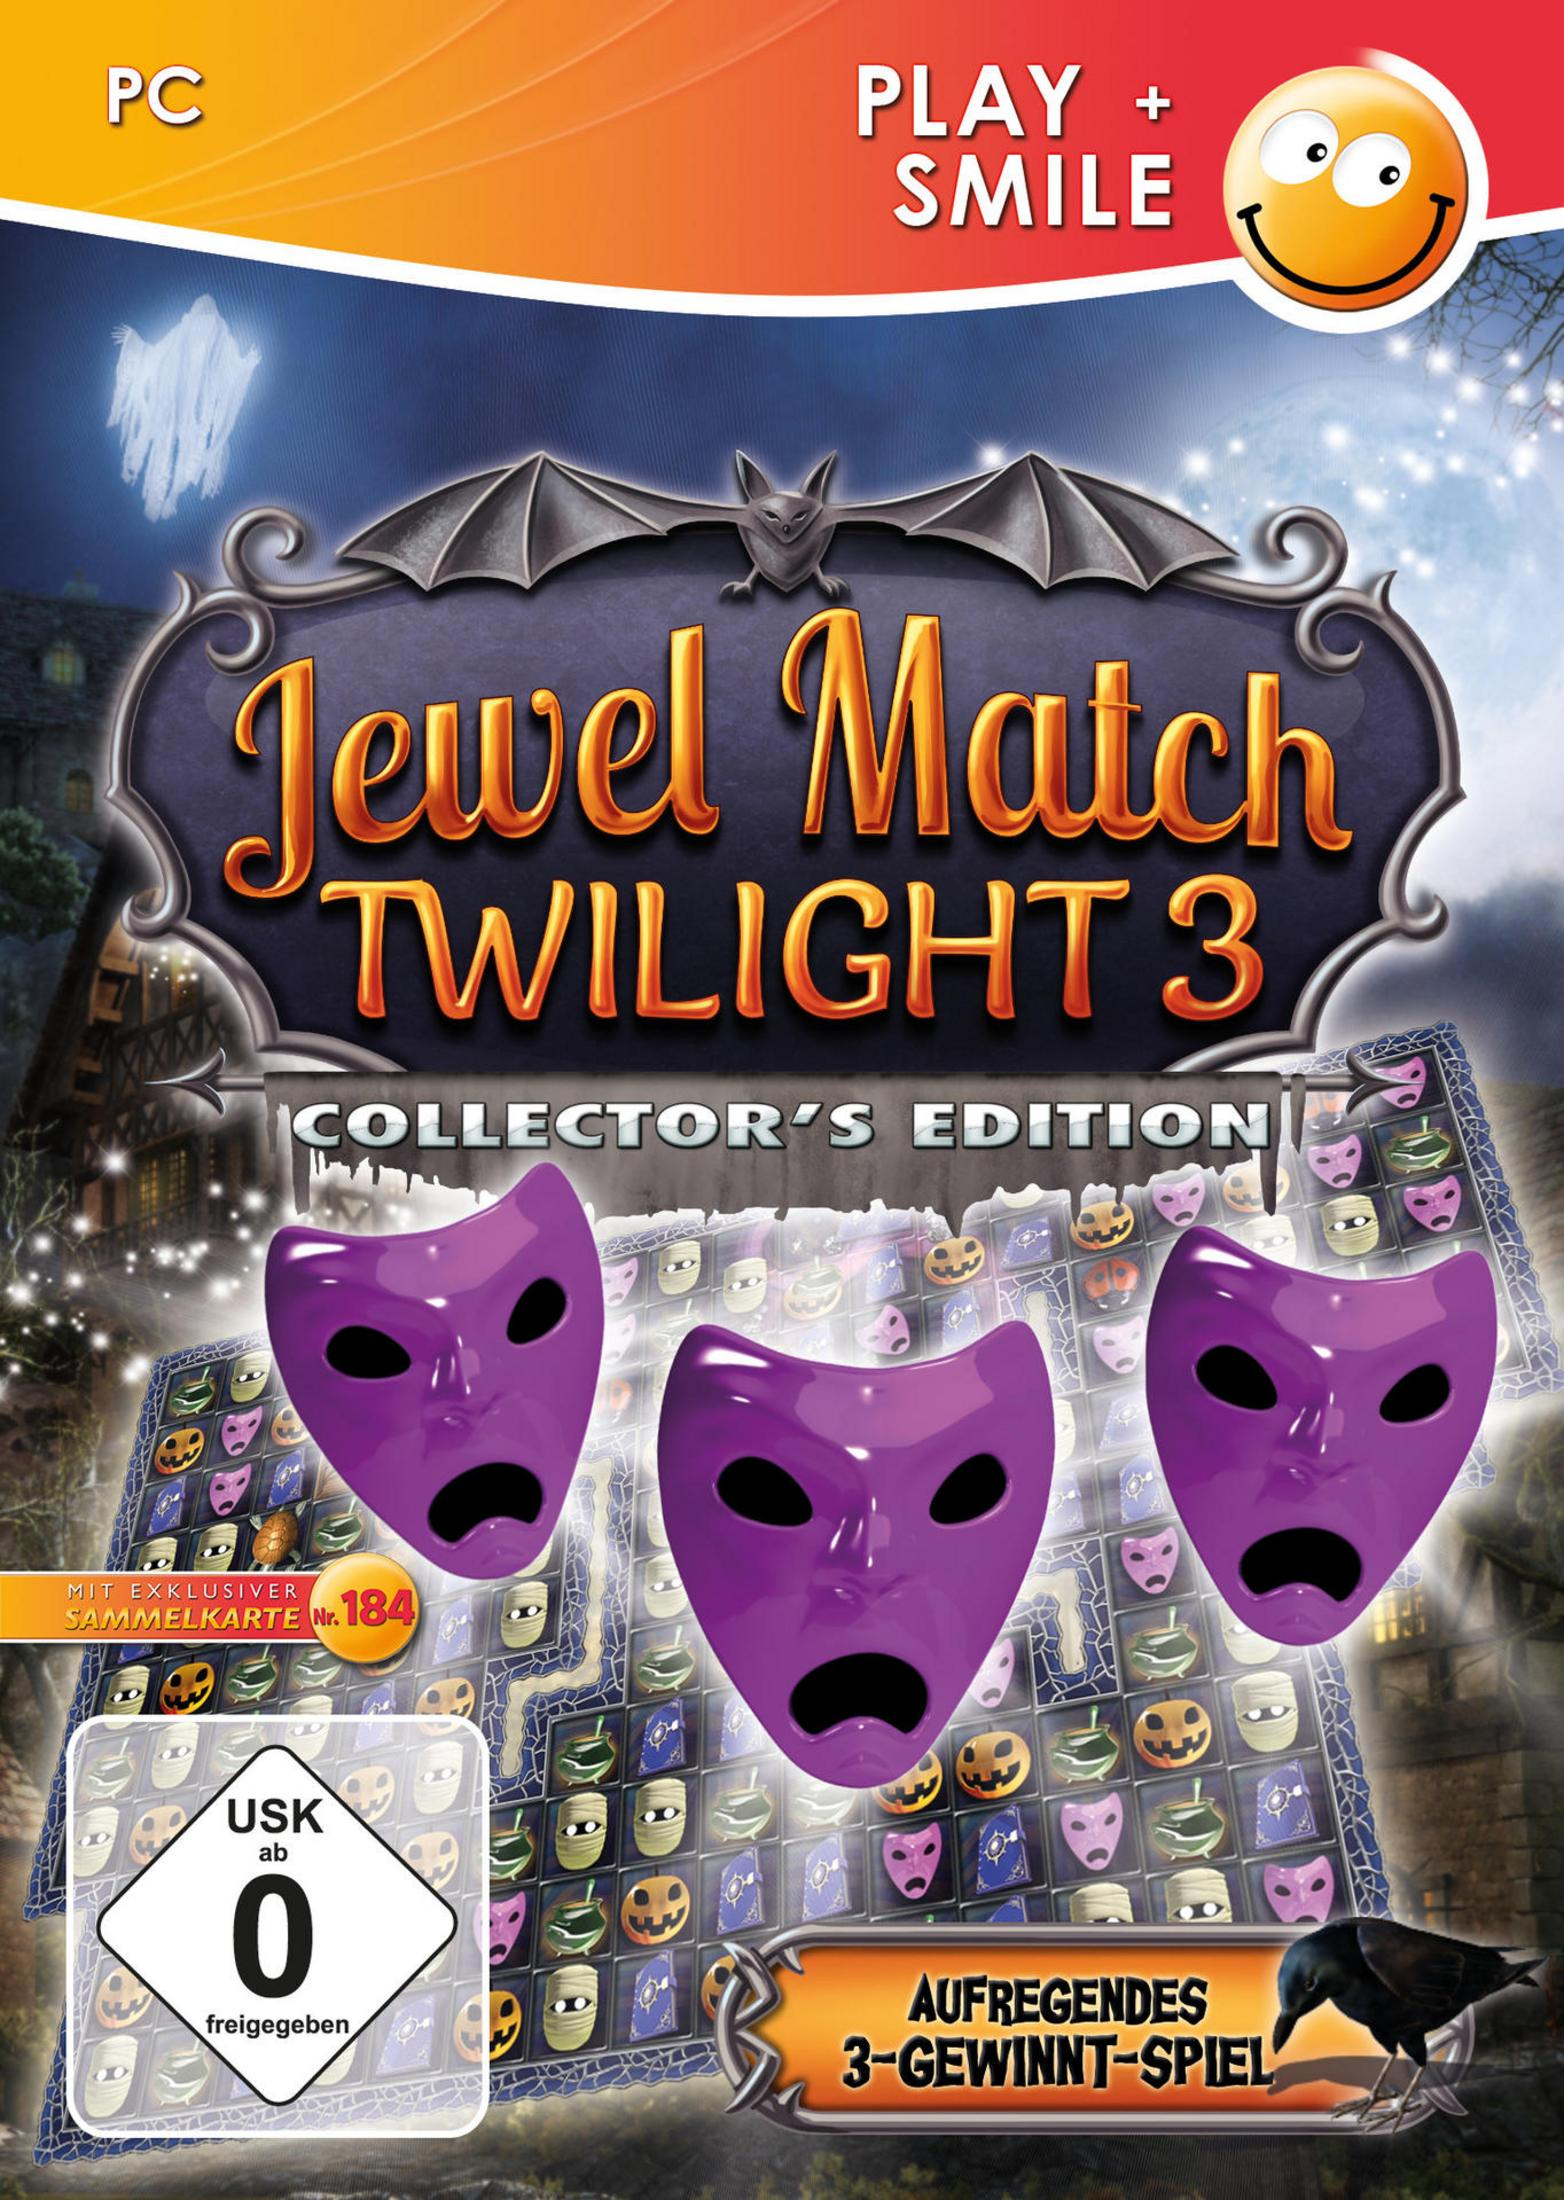 MATCH-TWILIGHT 3 - JEWEL (COLLECTOR EDITION) S [PC]